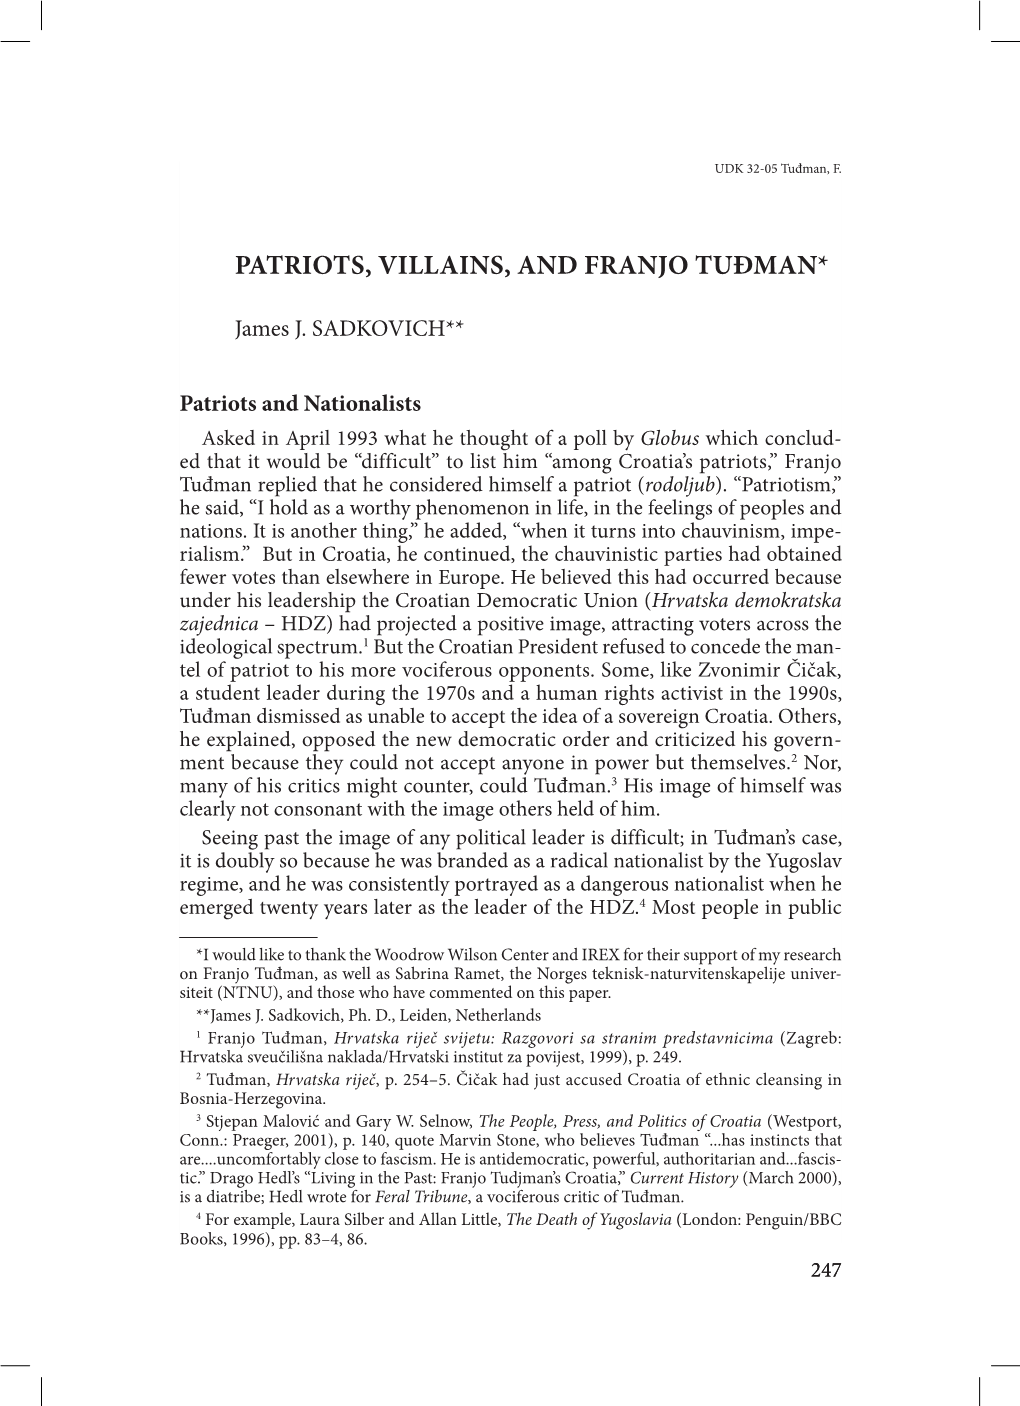 Patriots, Villains, and Franjo Tuđman*